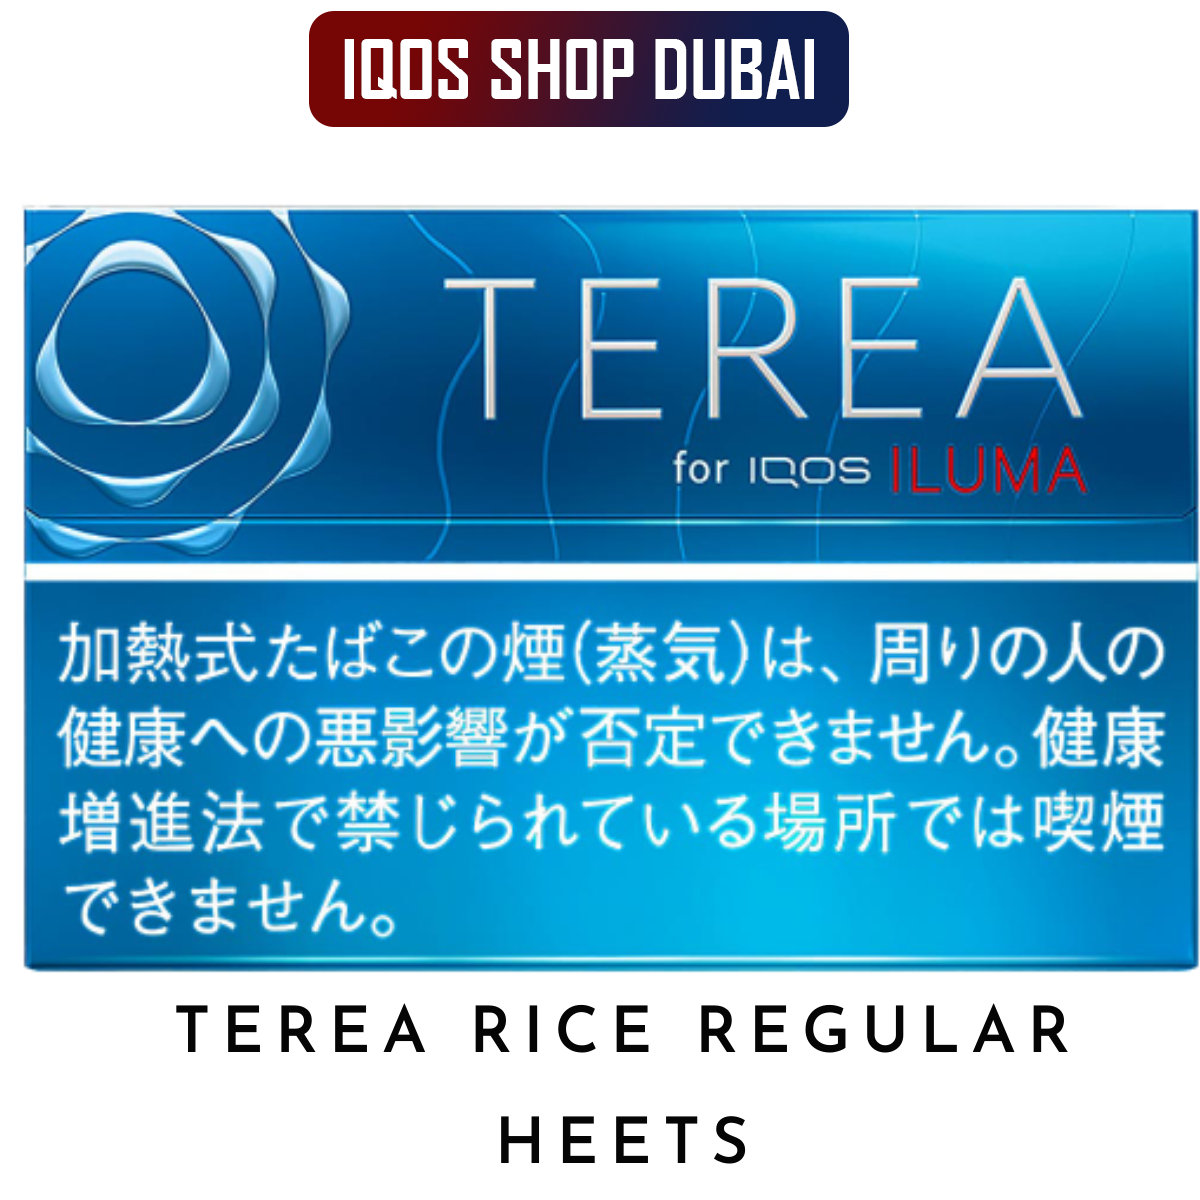 TEREA RICE REGULAR HEETS (Japan Version)